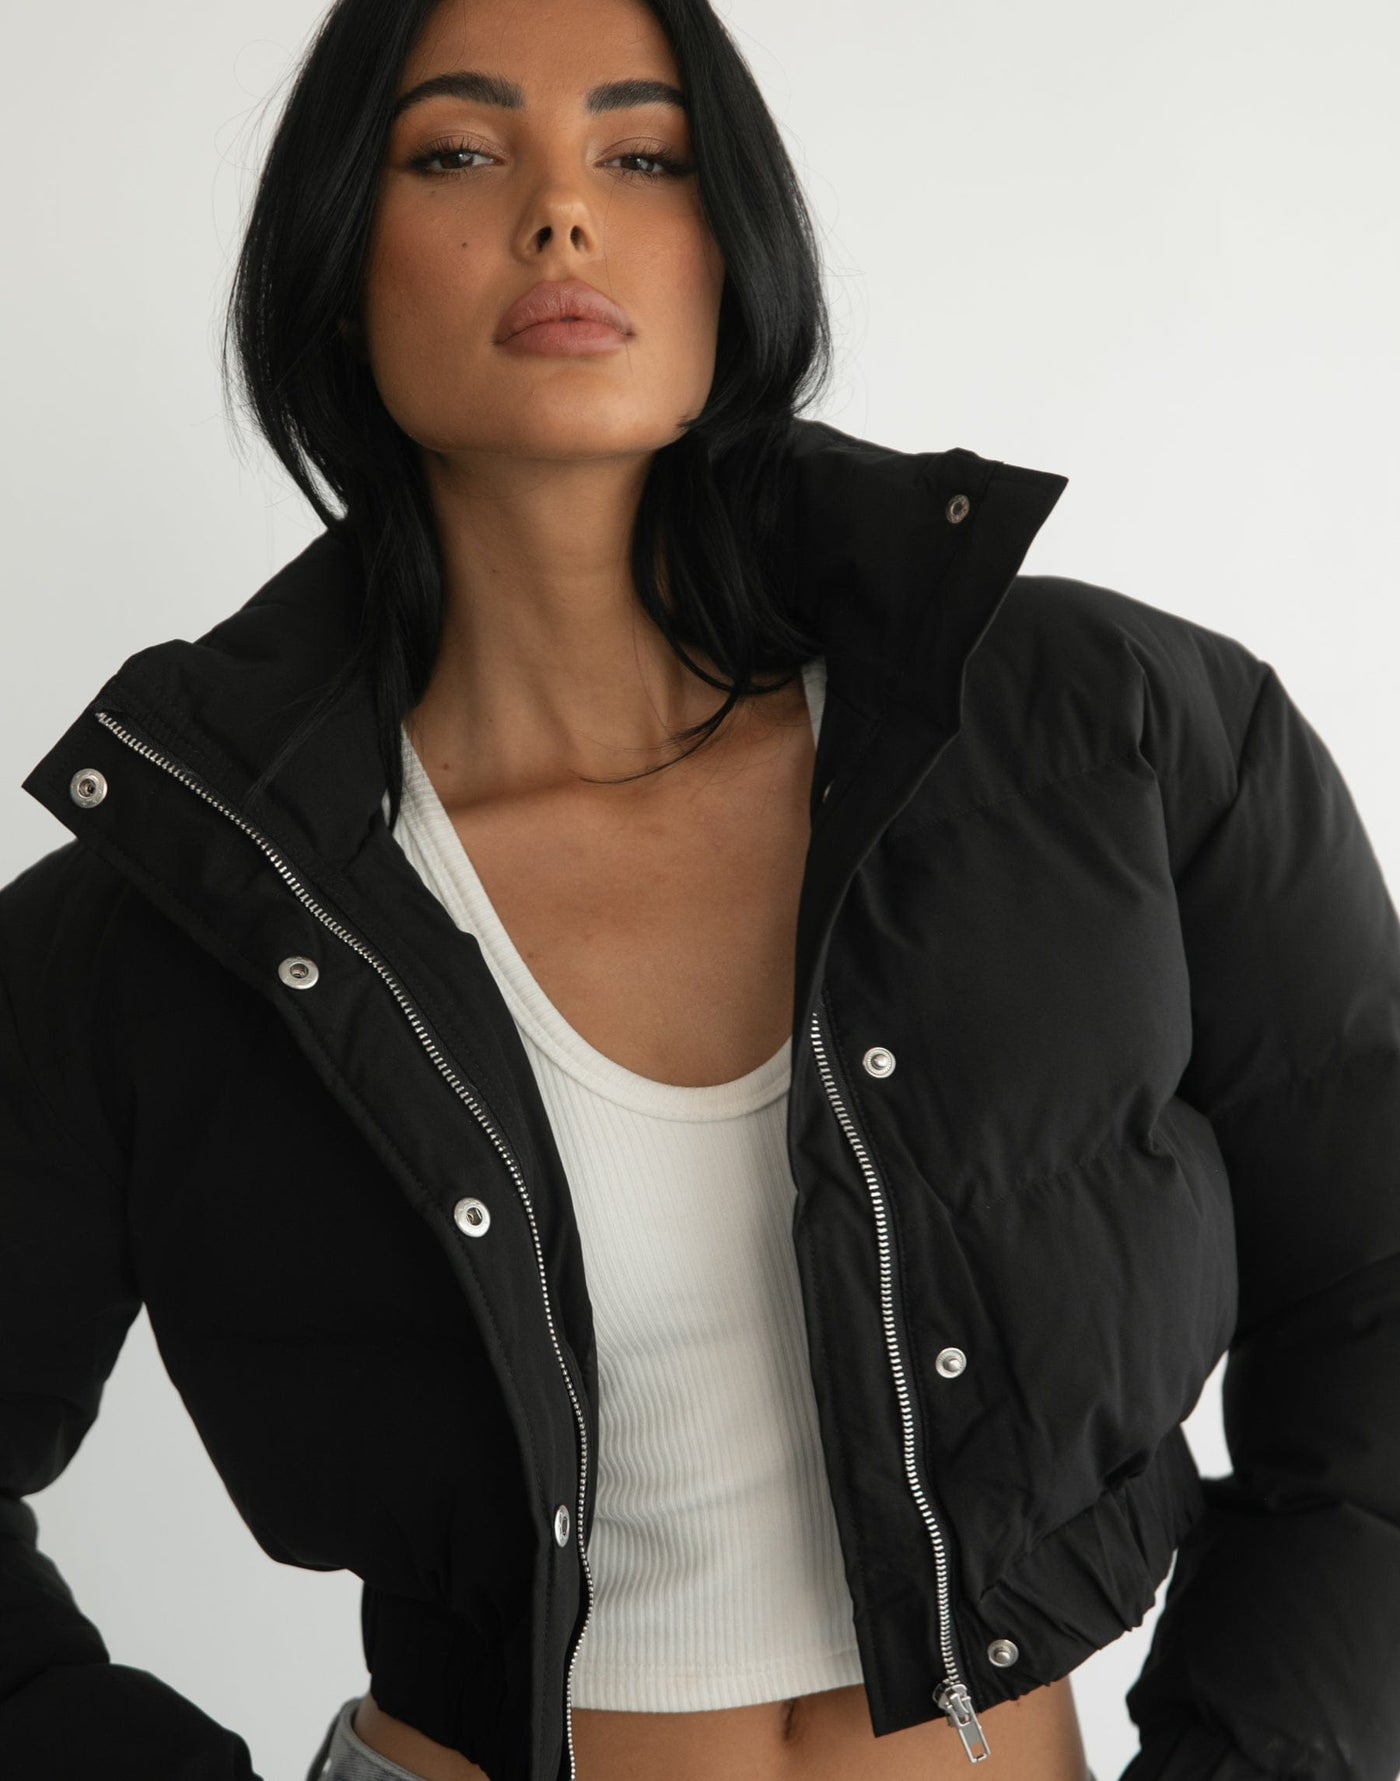 Robbie Puffer Jacket (Black) - Black Puffer Jacket - Women's Outerwear - Charcoal Clothing